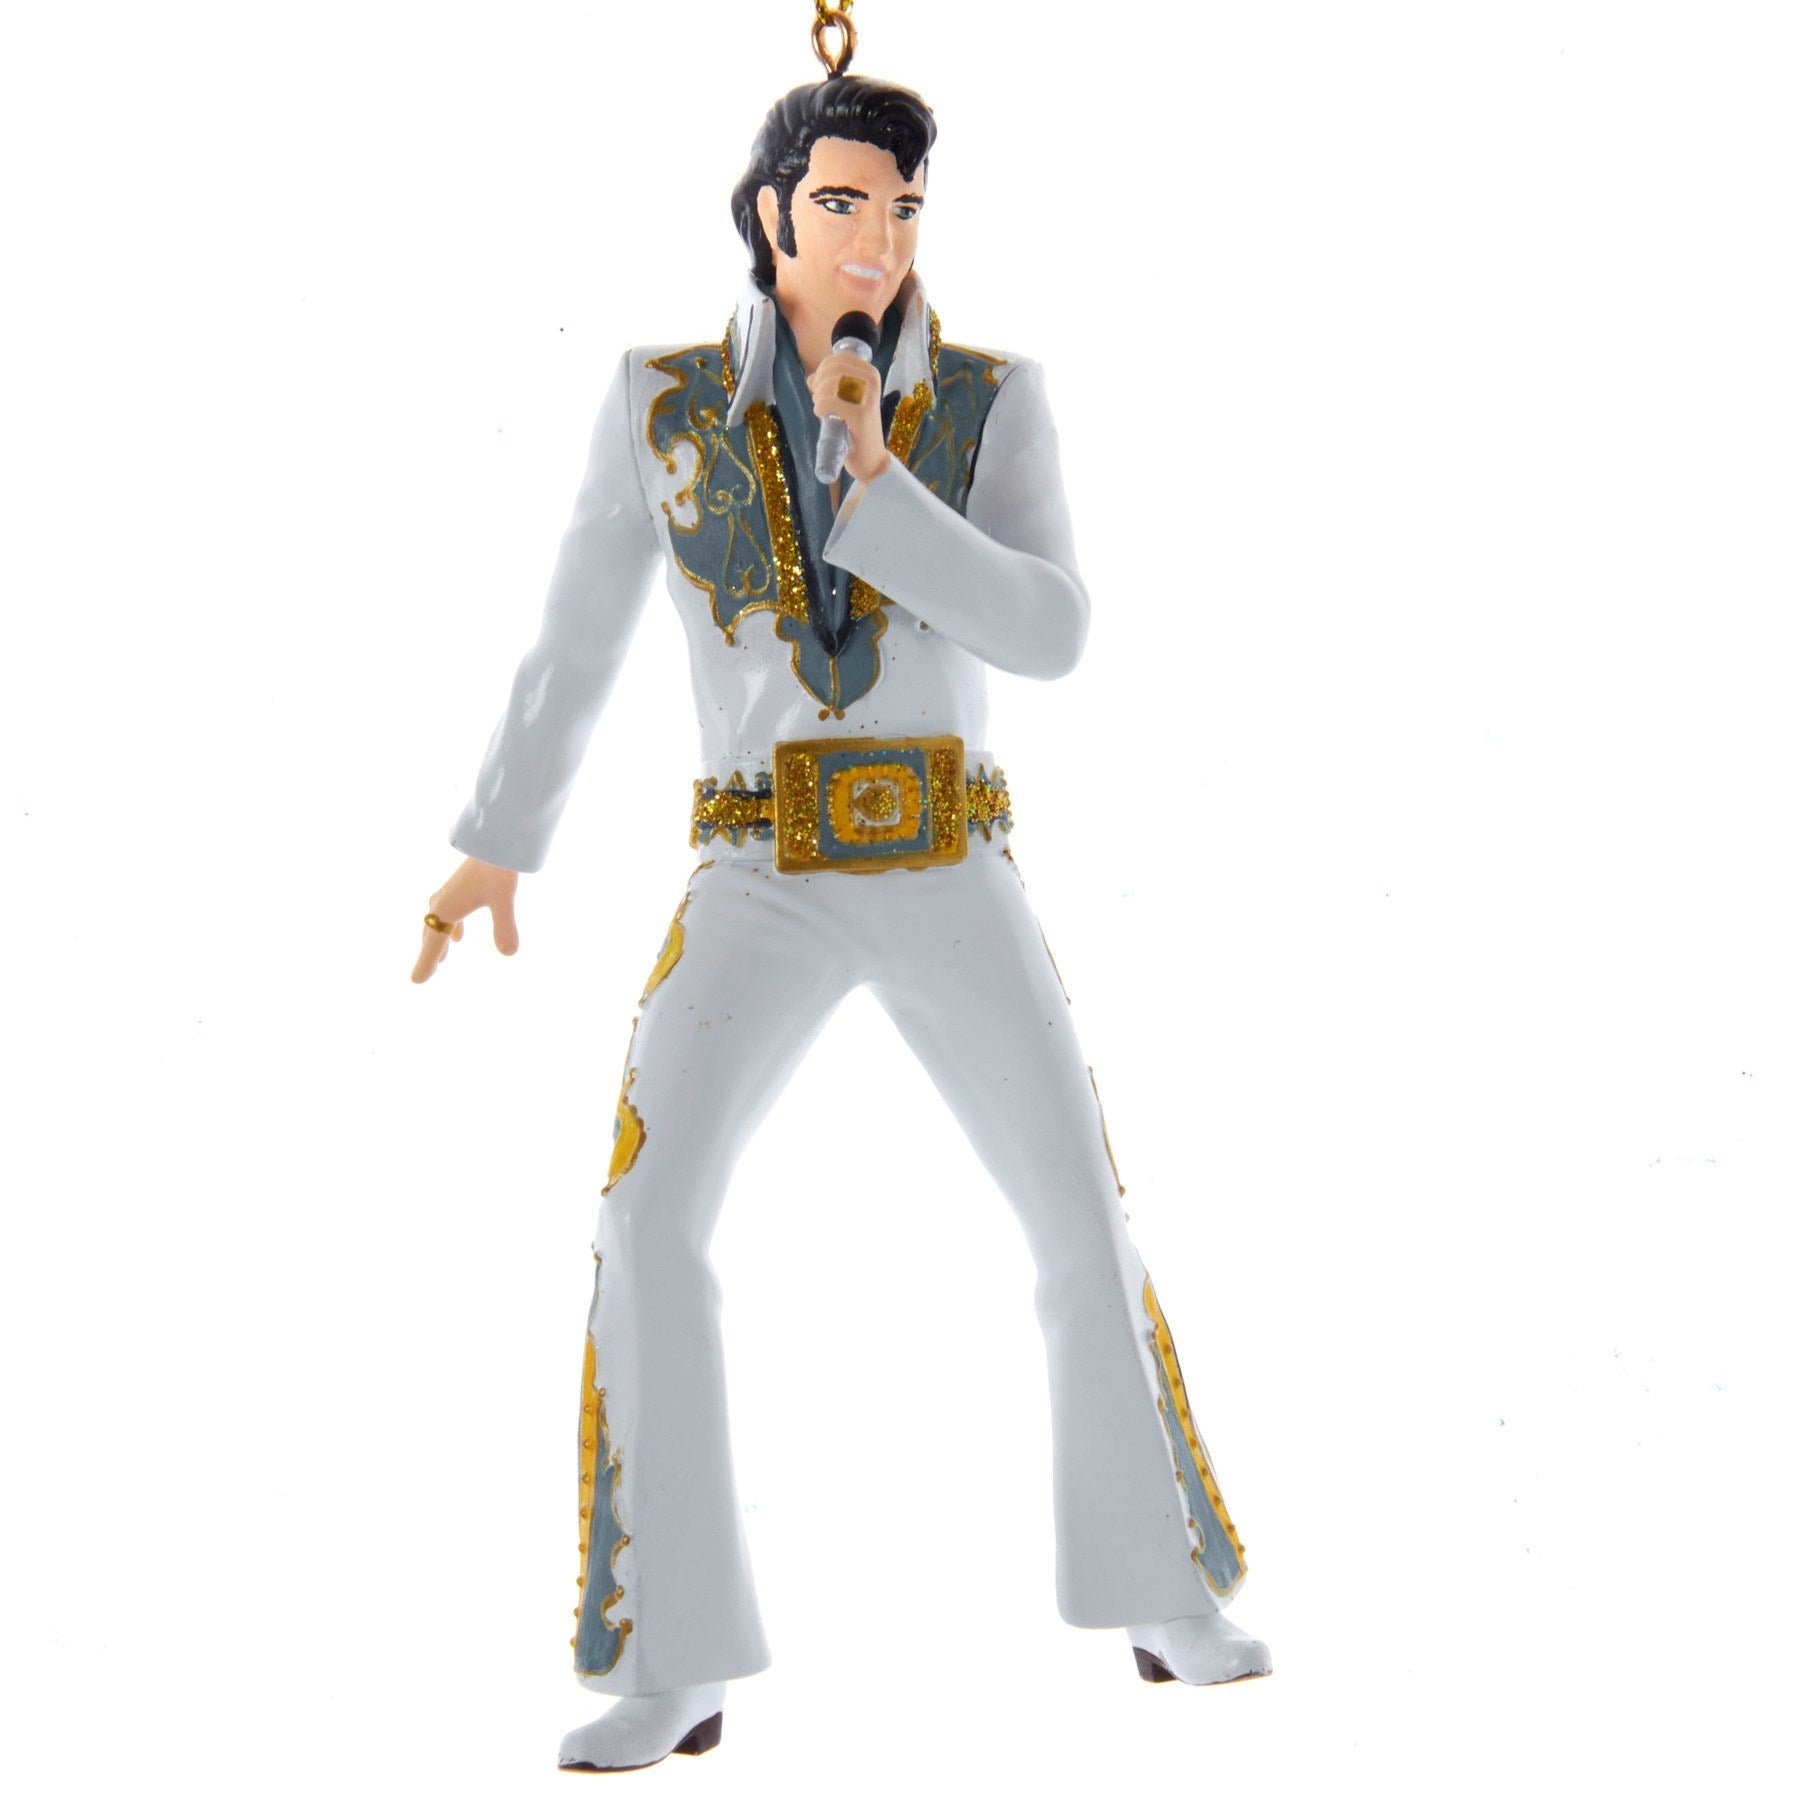 Elvis In Arabian Jumpsuit Ornament